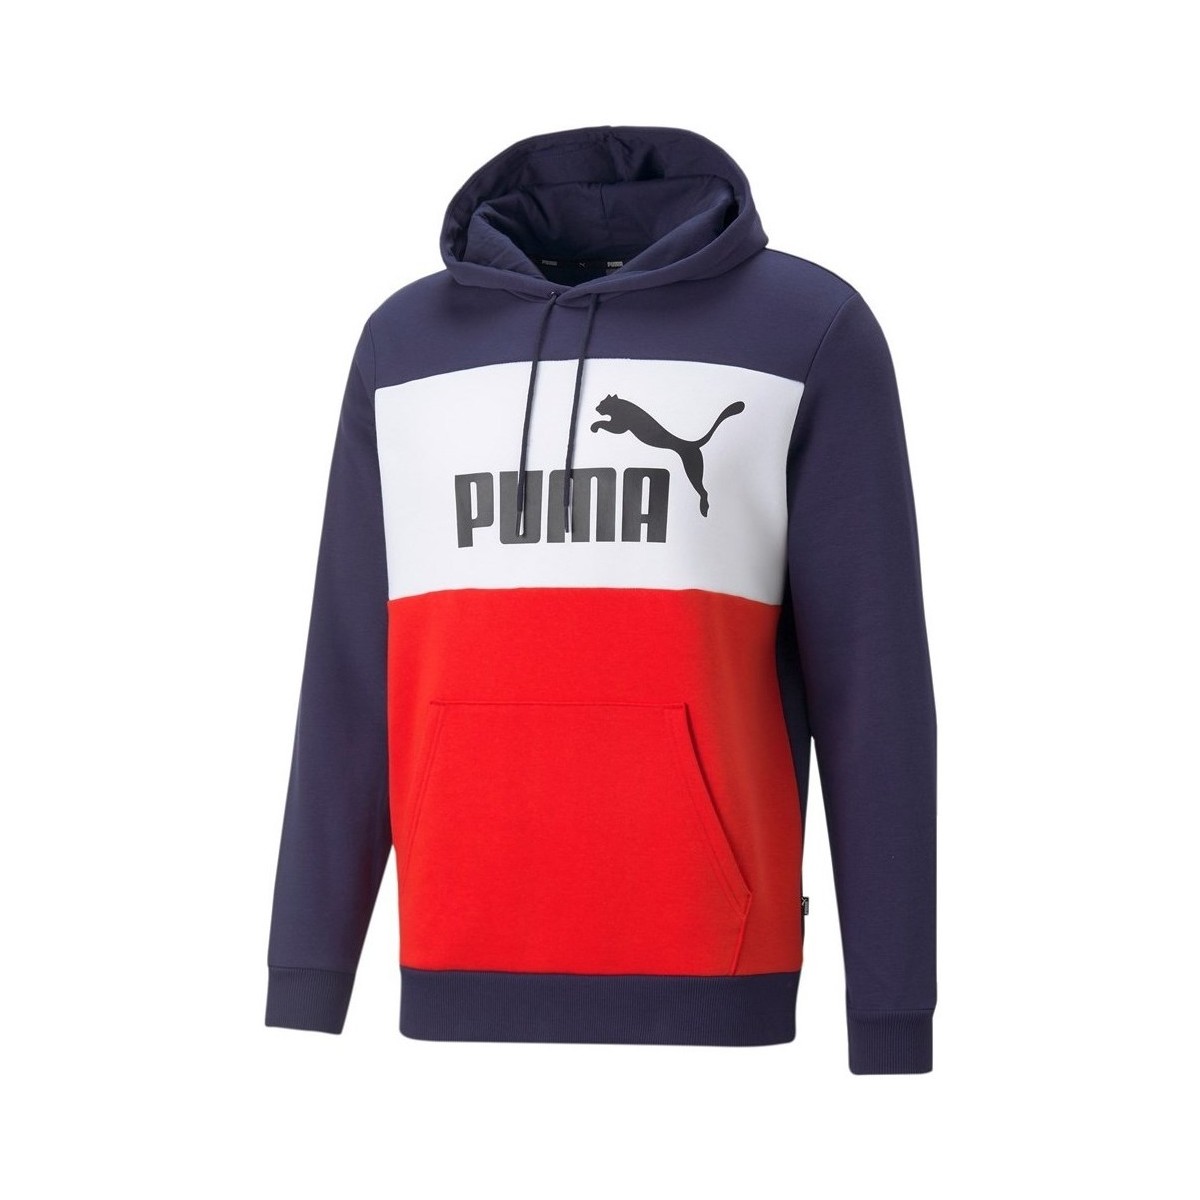 textil Herr Sweatshirts Puma Essentials Grenade, Röda